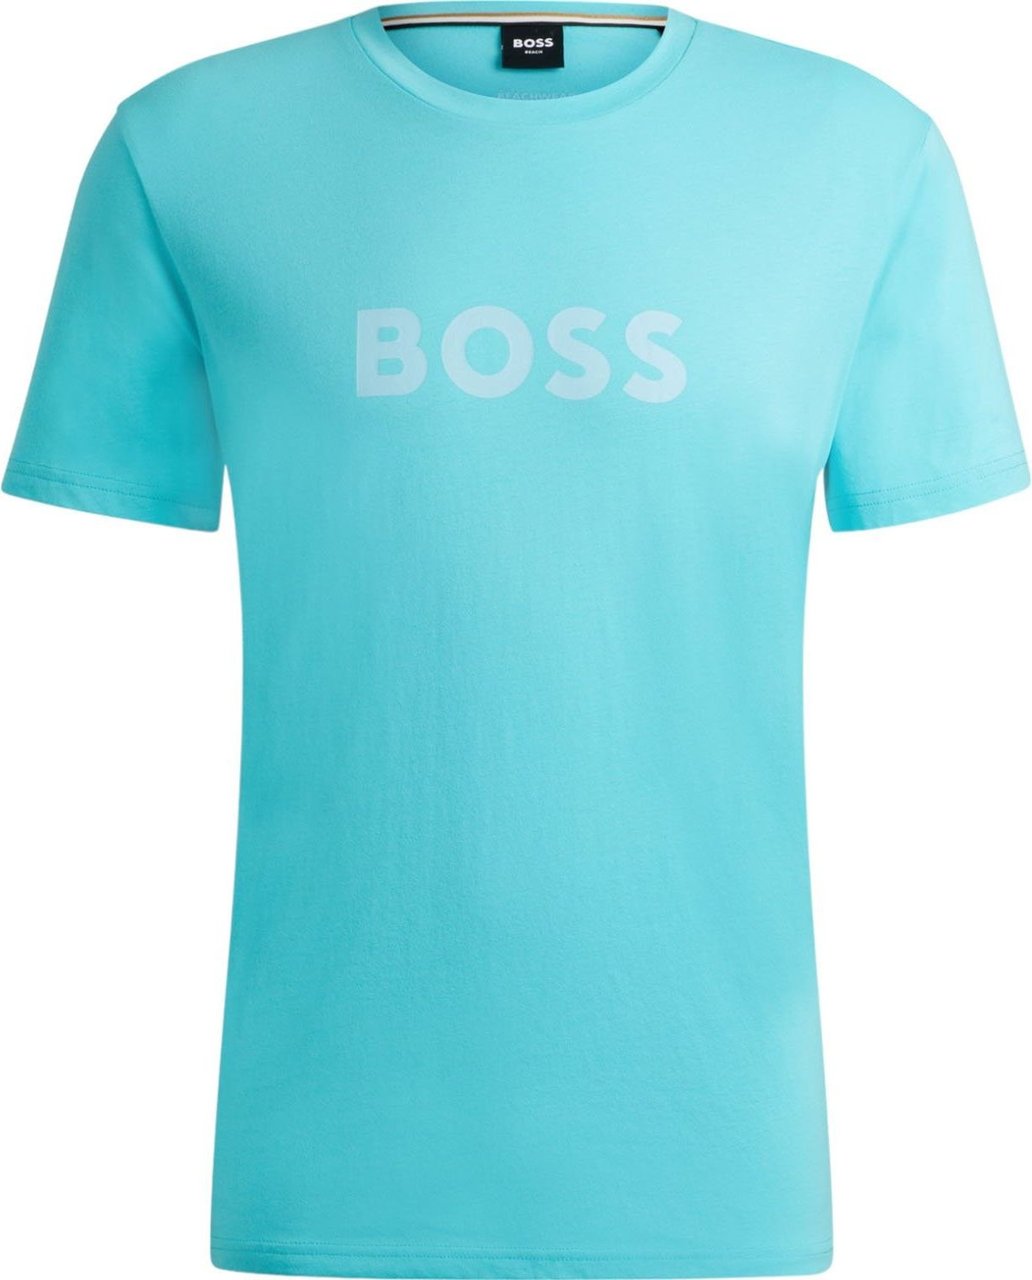 Hugo Boss Boss Heren T-shirt Blauw 50503276/442 T-SHIRT Blauw